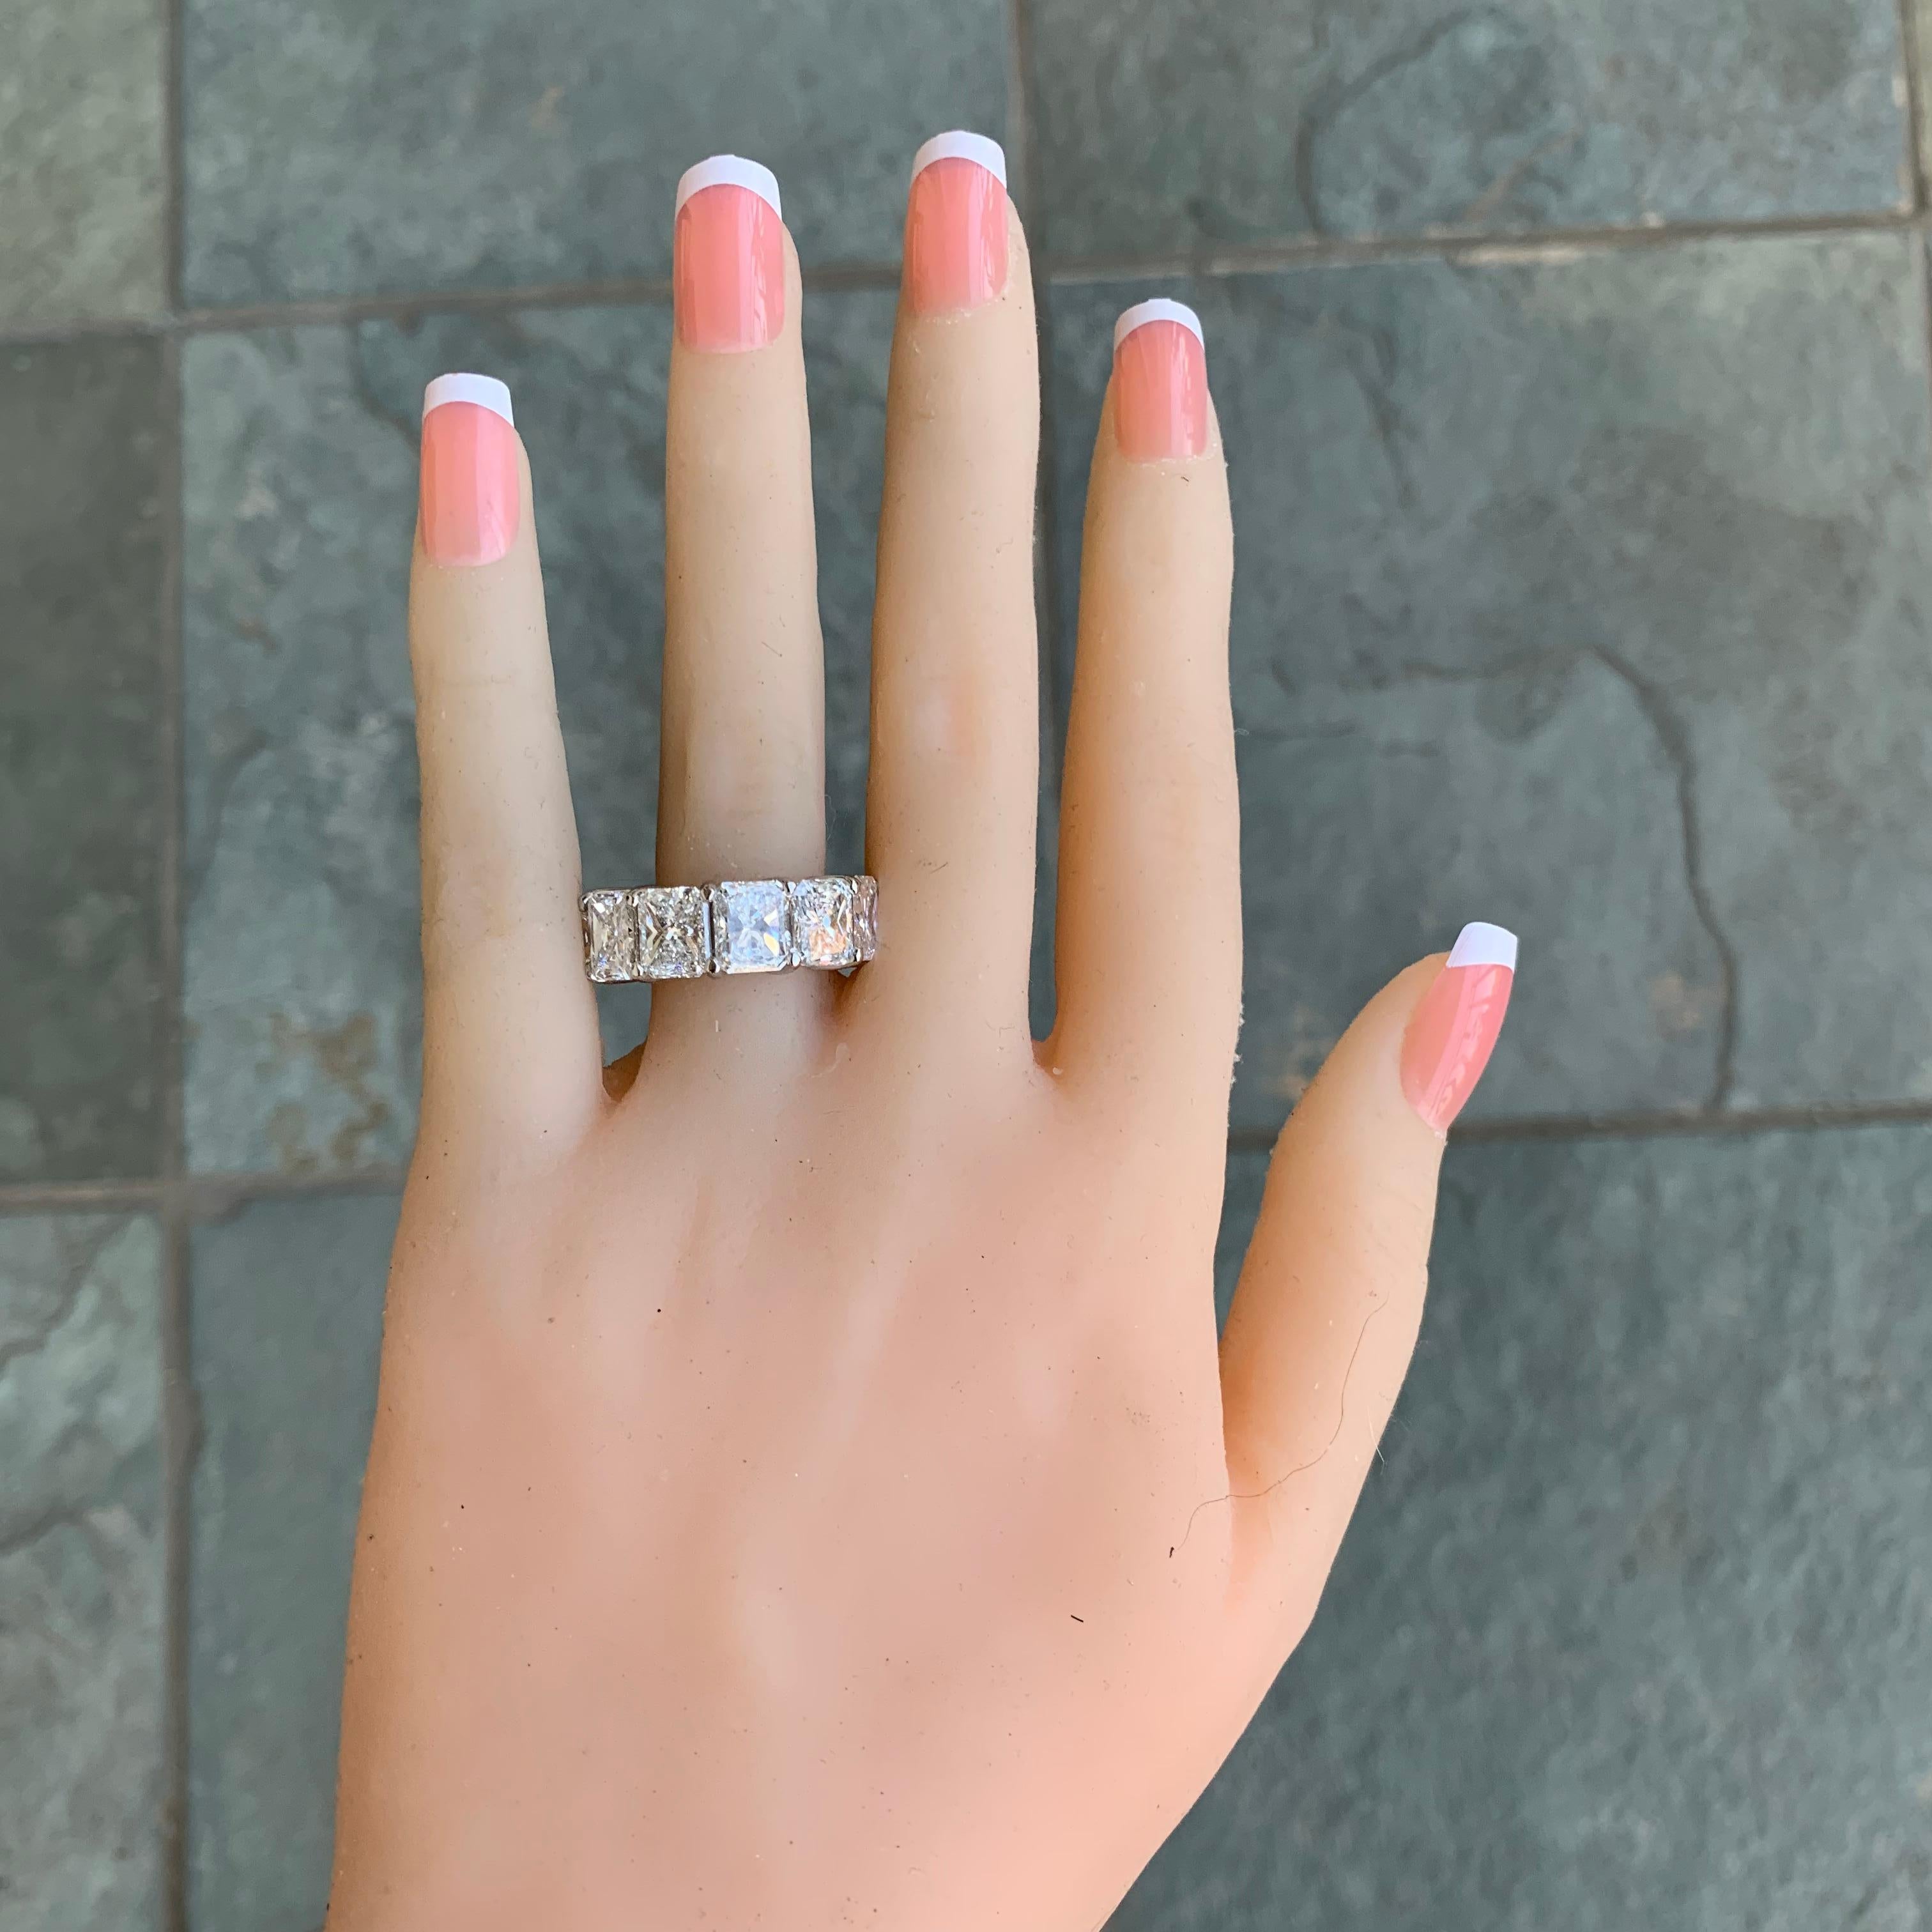 4 carat eternity band on finger